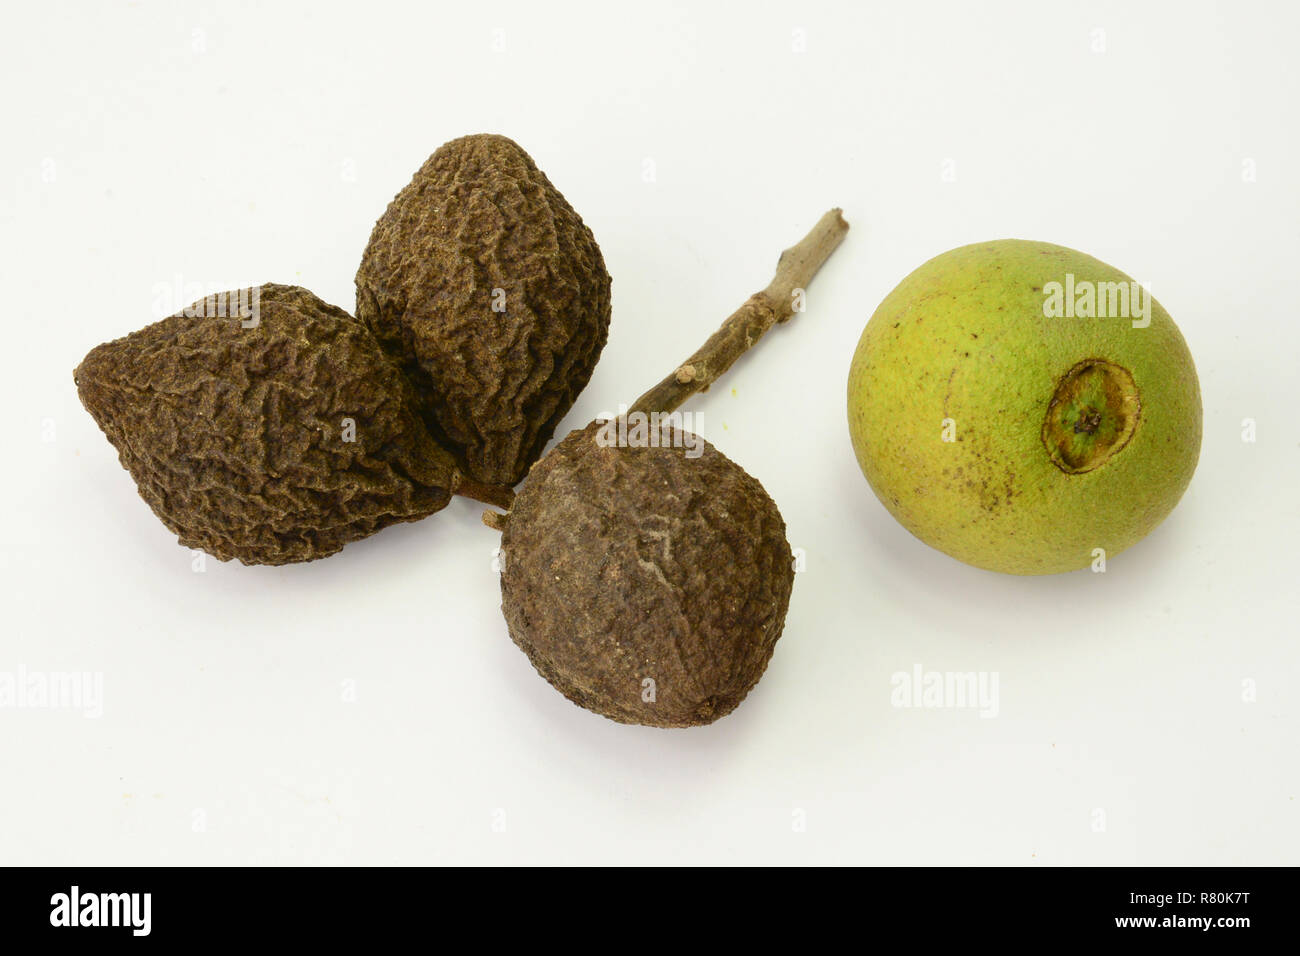 Black Walnut, American Walnut (Juglans nigra). Ripe and unripe fruit, studio picture against a white background Stock Photo